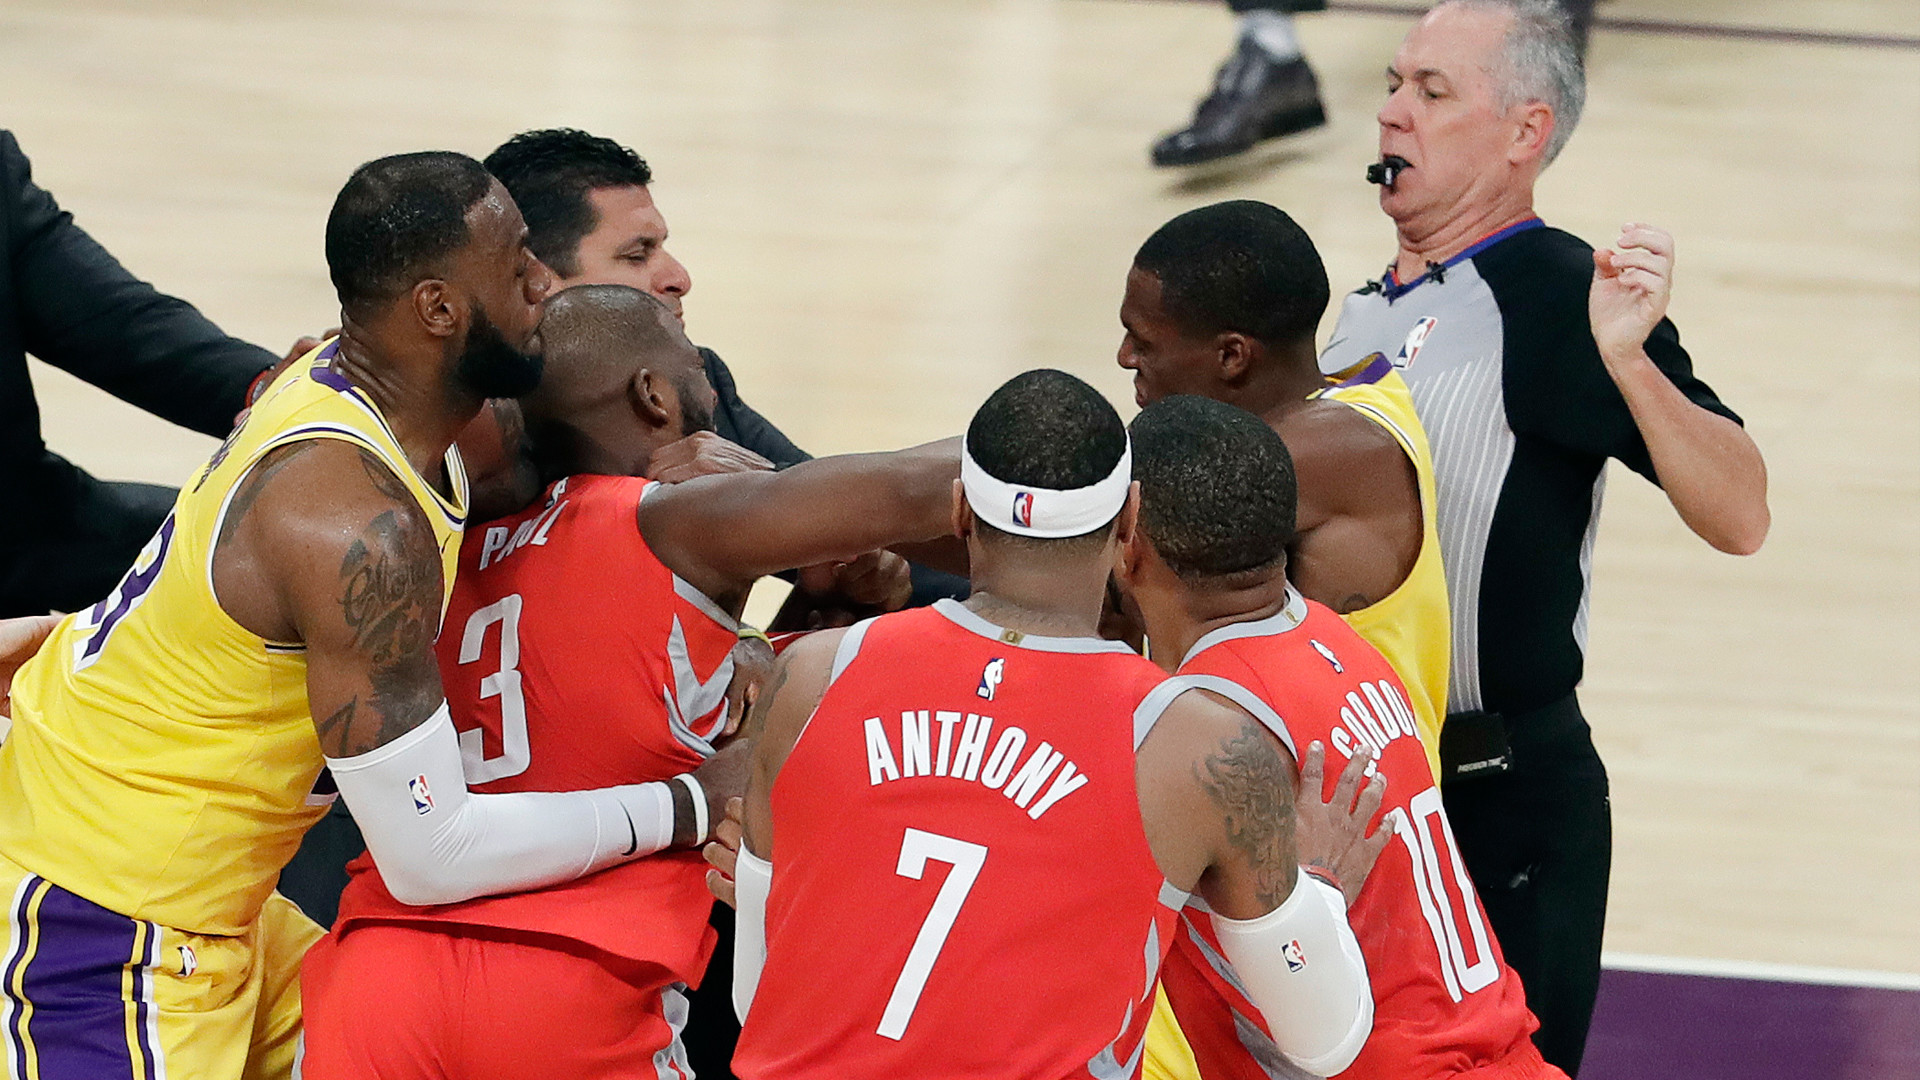 1920x1080 Watch Rajon Rondo punch Chris Paul in Lakers-Rockets NBA brawl